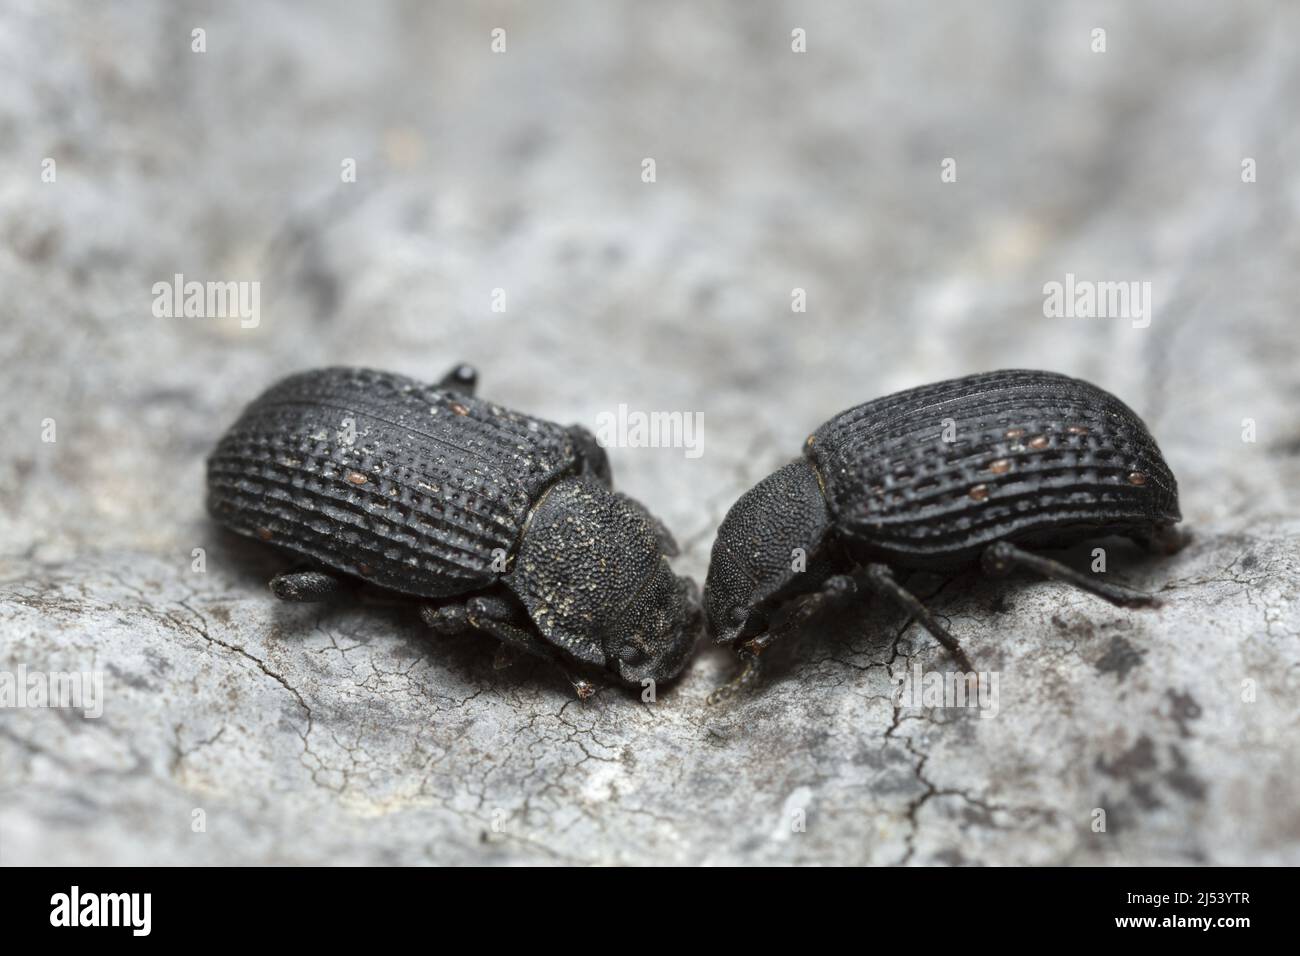 Bolitophagus reticulatus beetles, macro photo Stock Photo